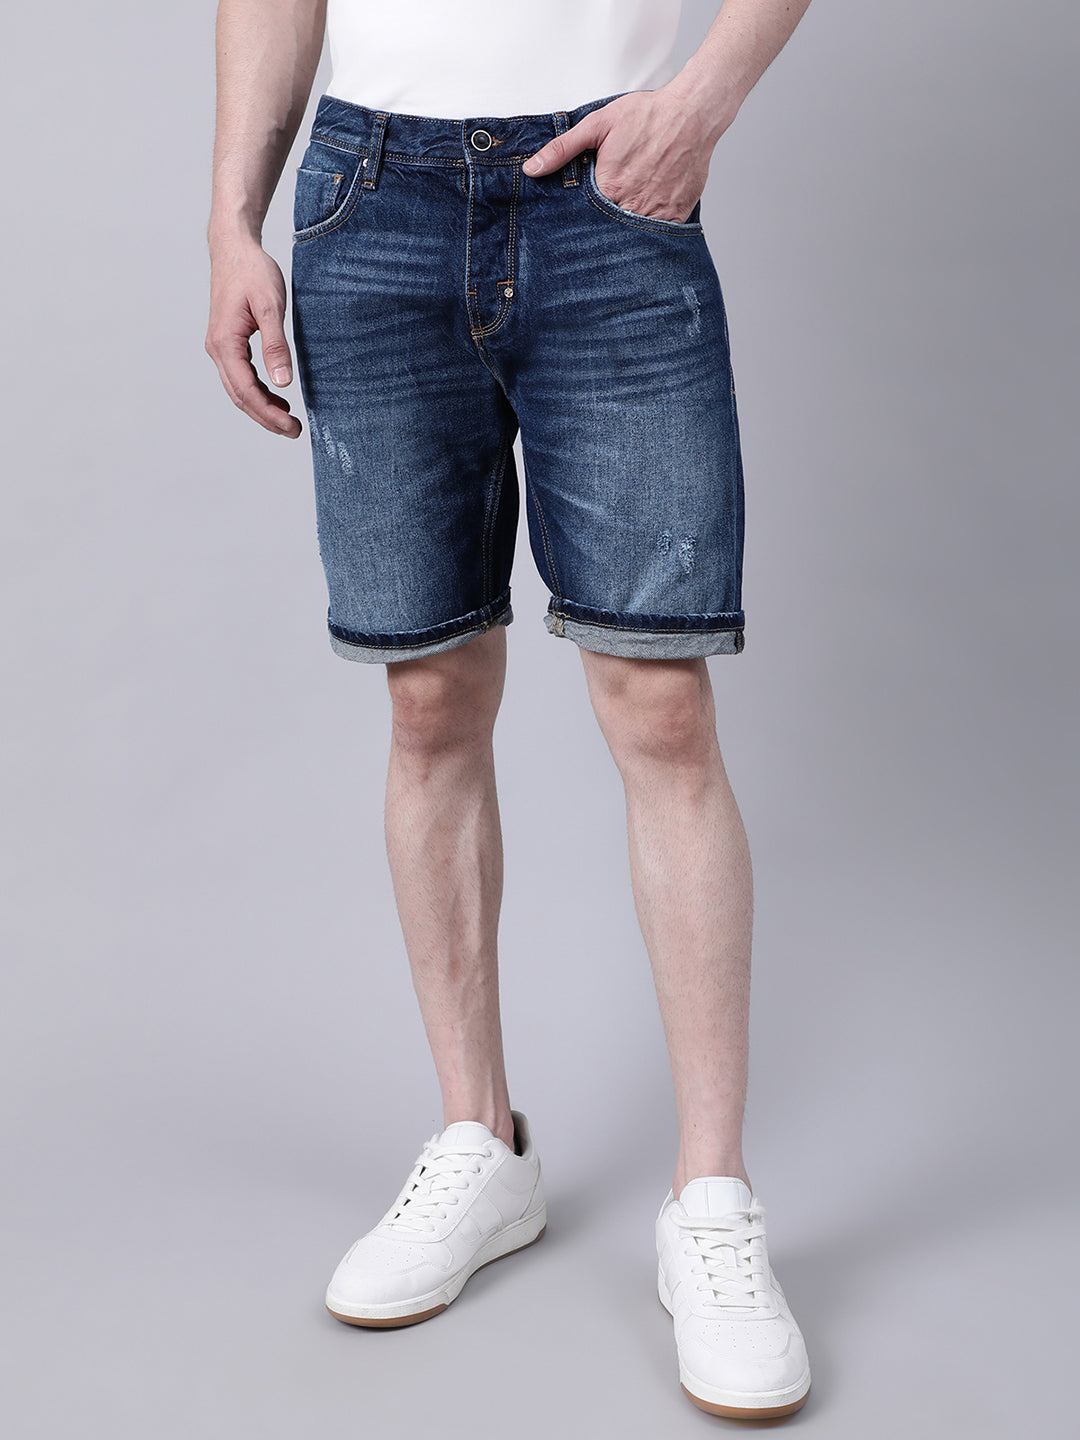 2023 new men's short jeans fashionable all match denim shorts capris for men  bermuda masculina men clothing pantalones cortos - AliExpress